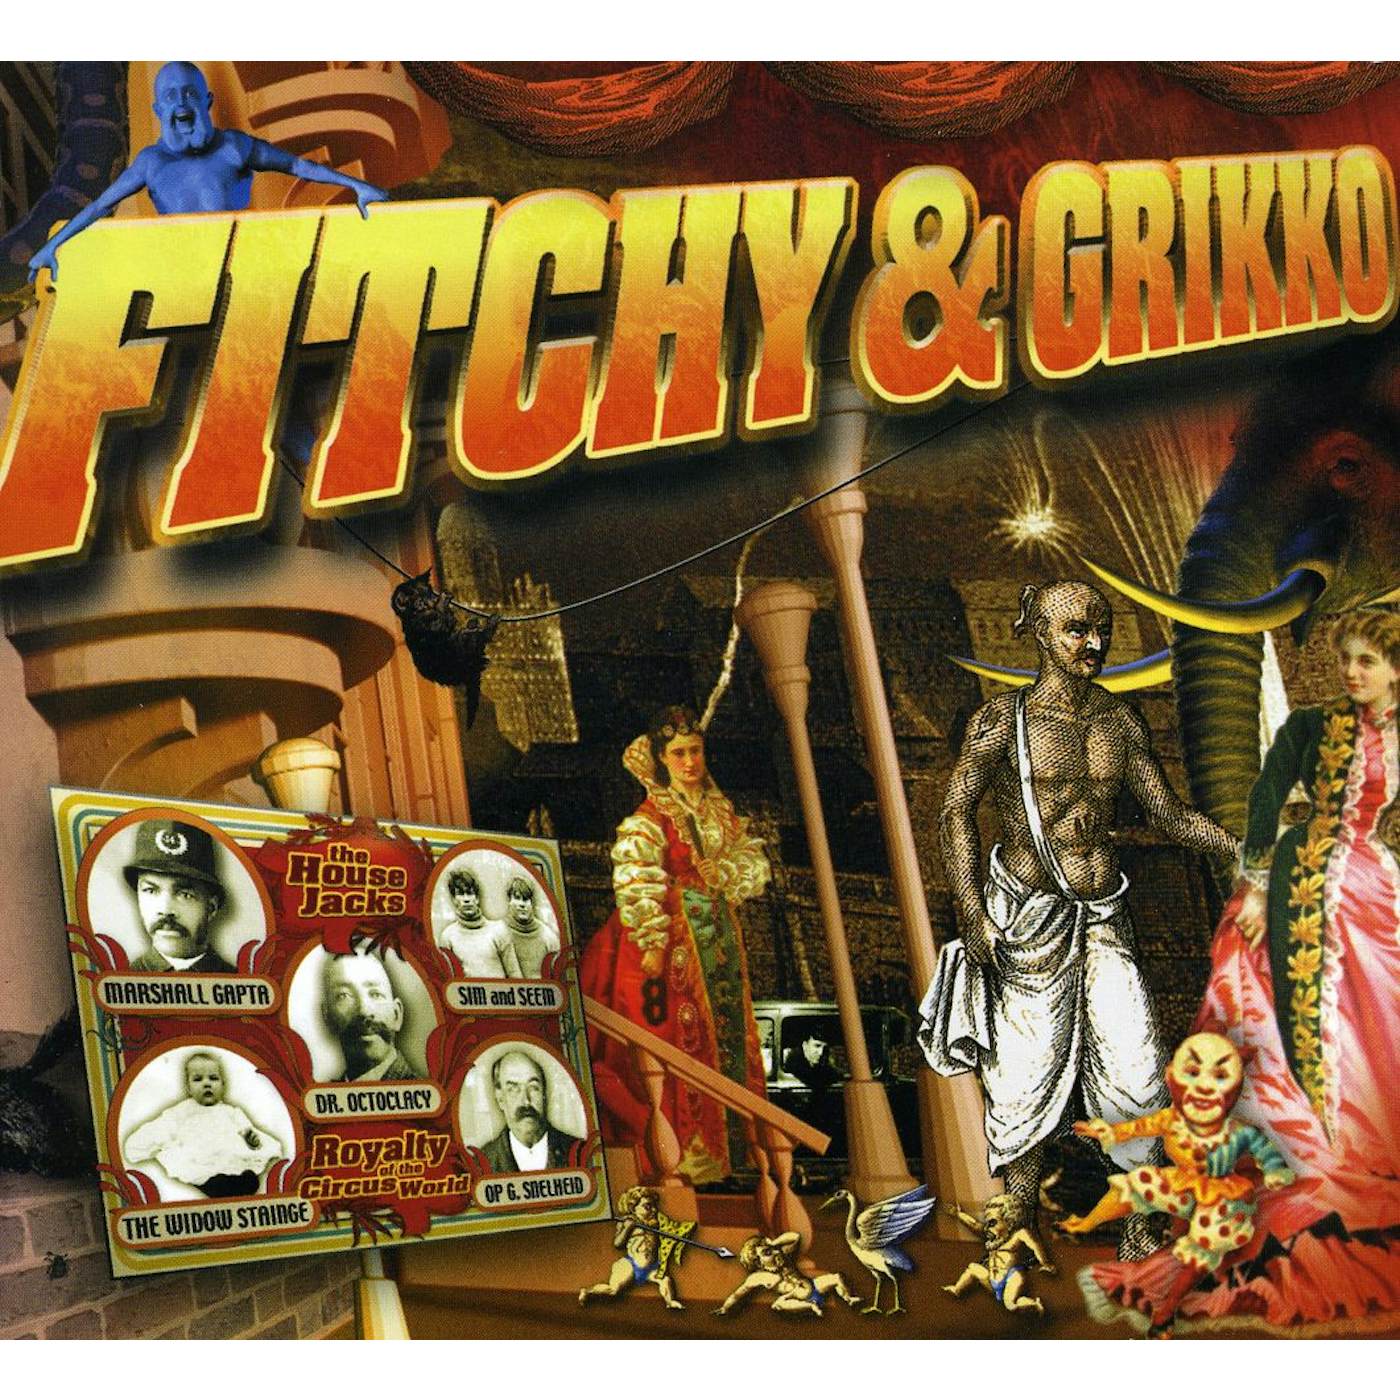 The House Jacks FITCHY & GRIKKO CD